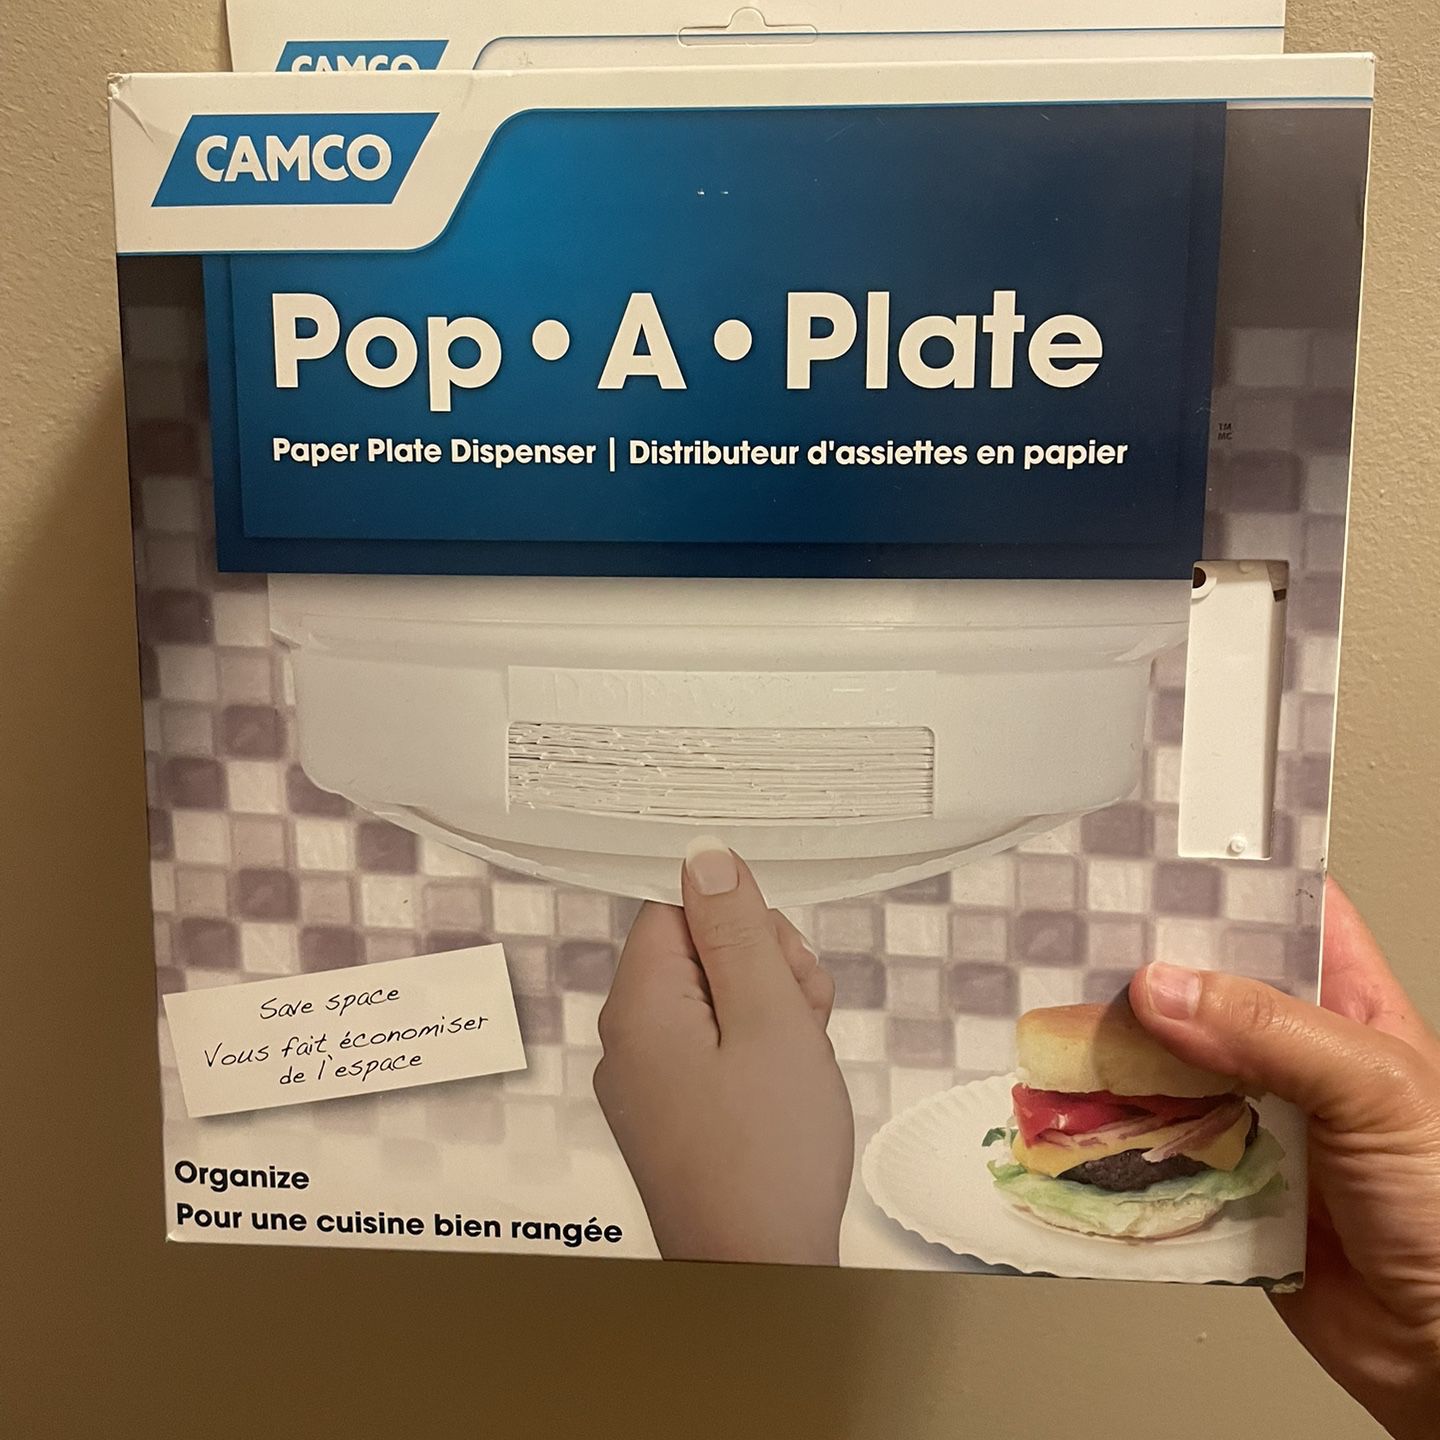 Pop-a-plate Camco